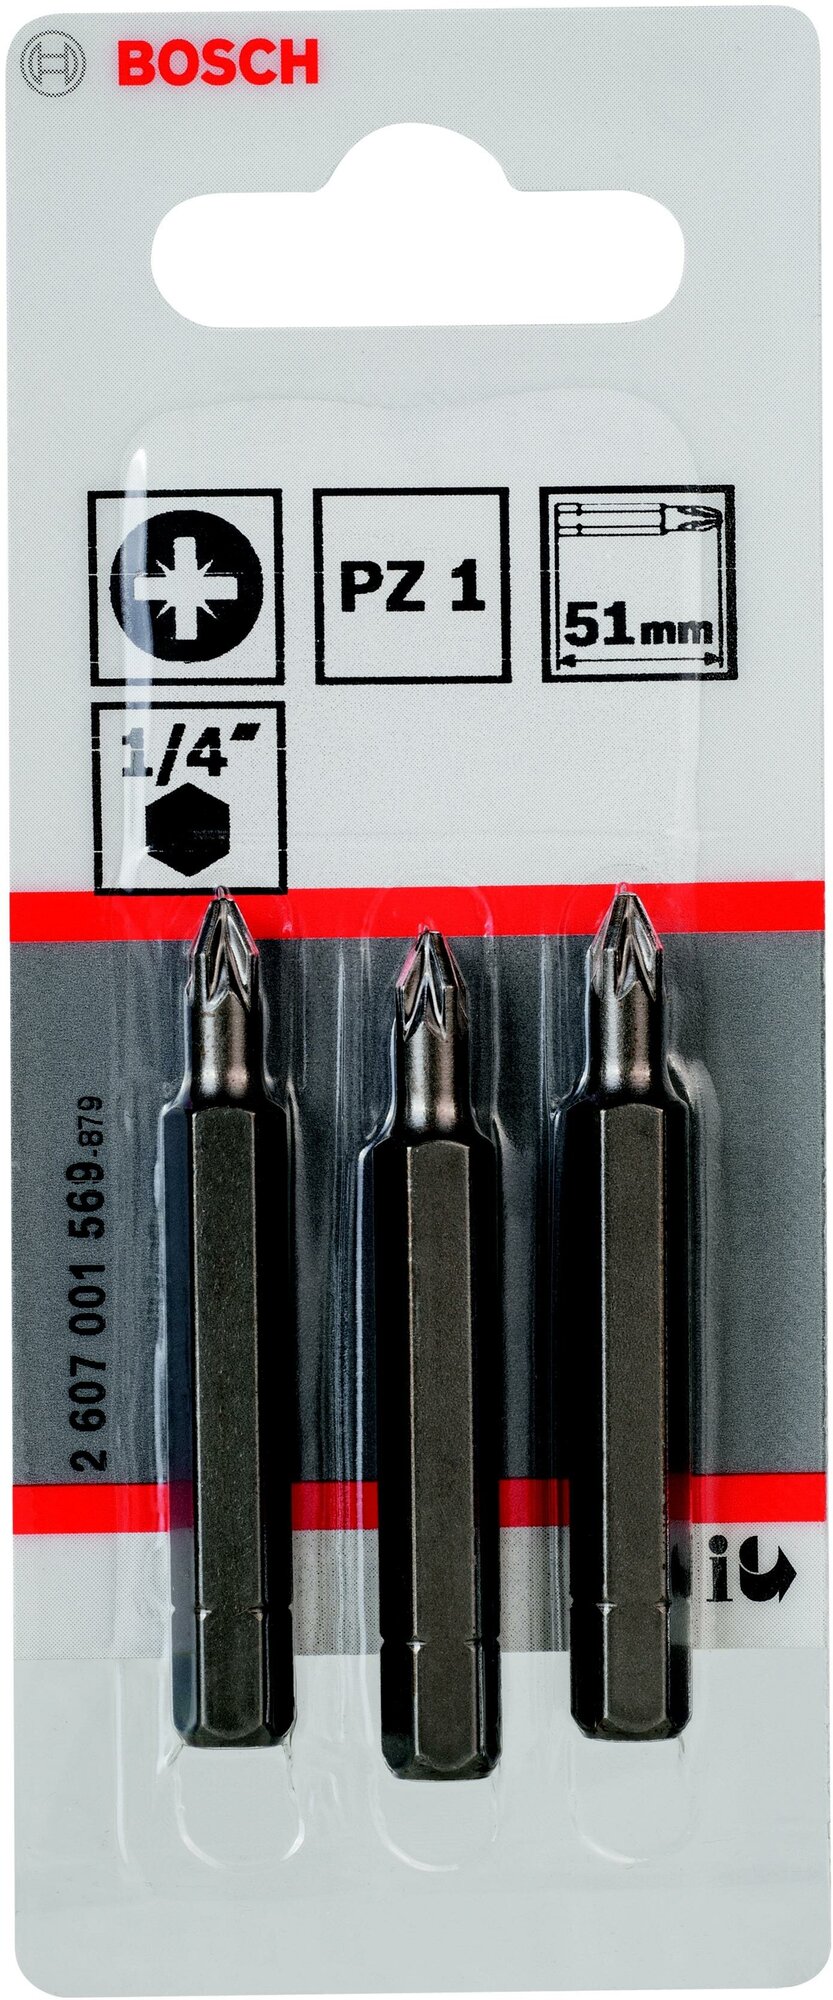 Биты для шуруповертов Bosch PZ1 2607001569, XH, 51 мм, 3 шт. - фотография № 7